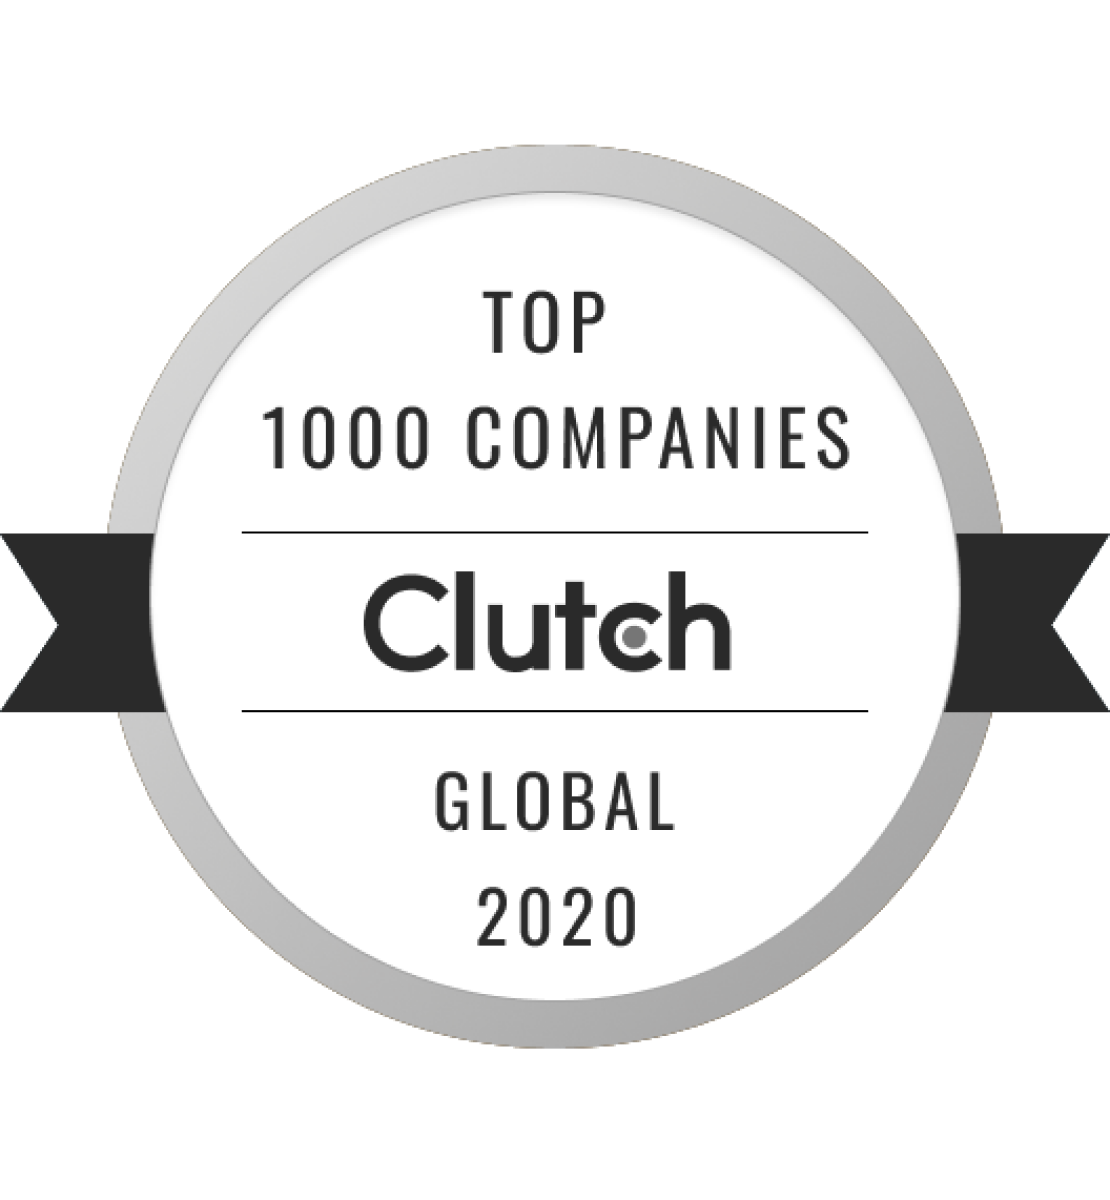 Top 1000 Companies - Clutch